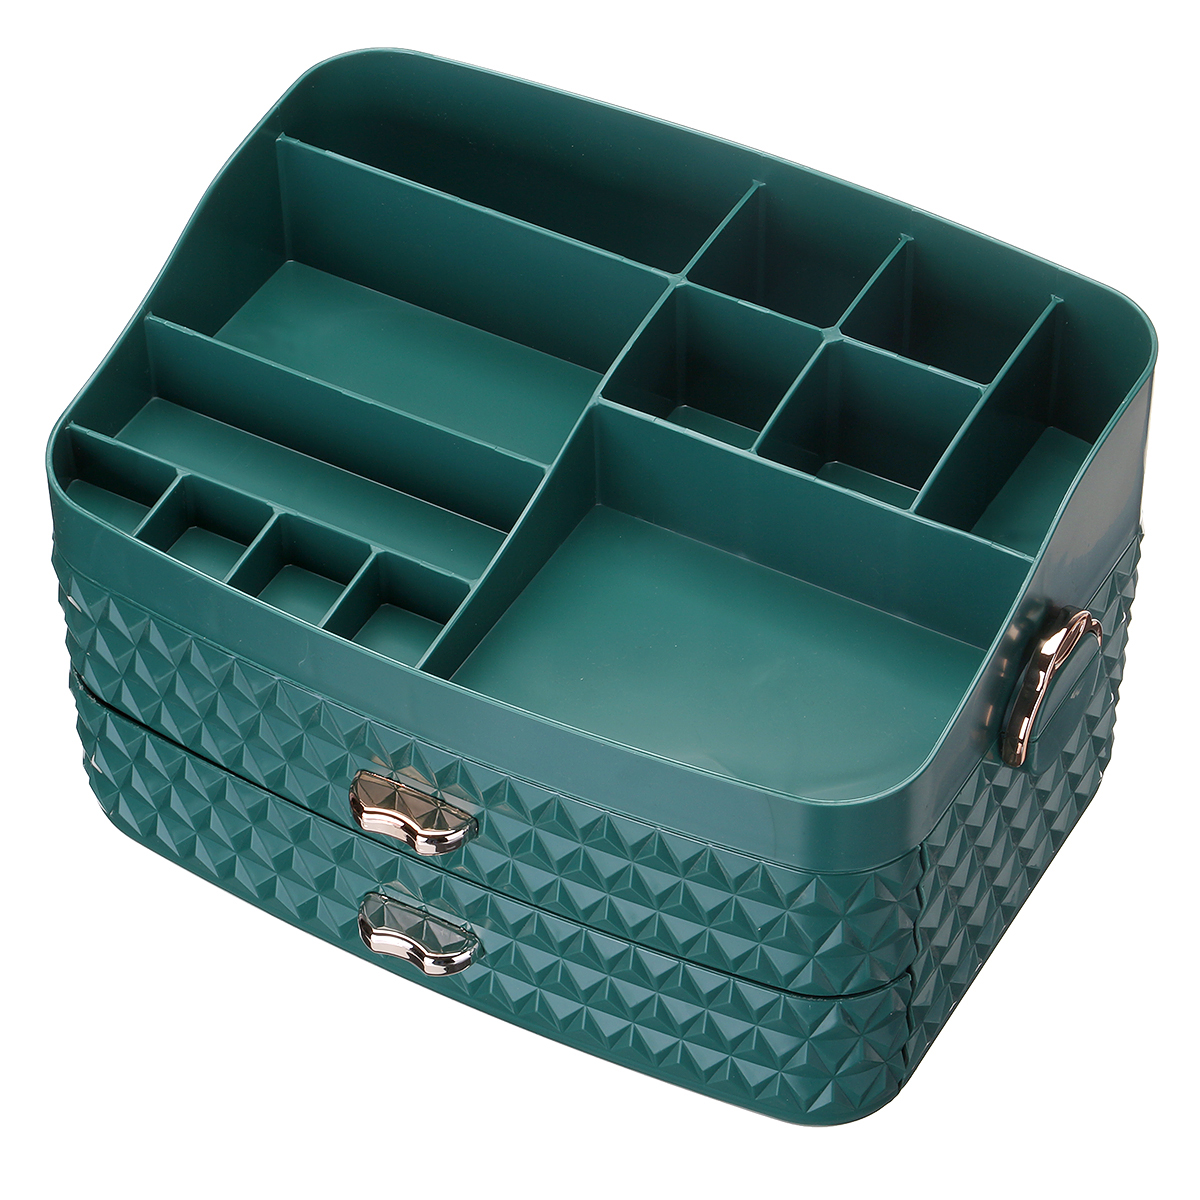 Dustproof-Cosmetic-Storage-Box-with-Drawer-Large-Capacity-Desktop-Furnishings-Organizer-Home-Desk-Su-1777438-16